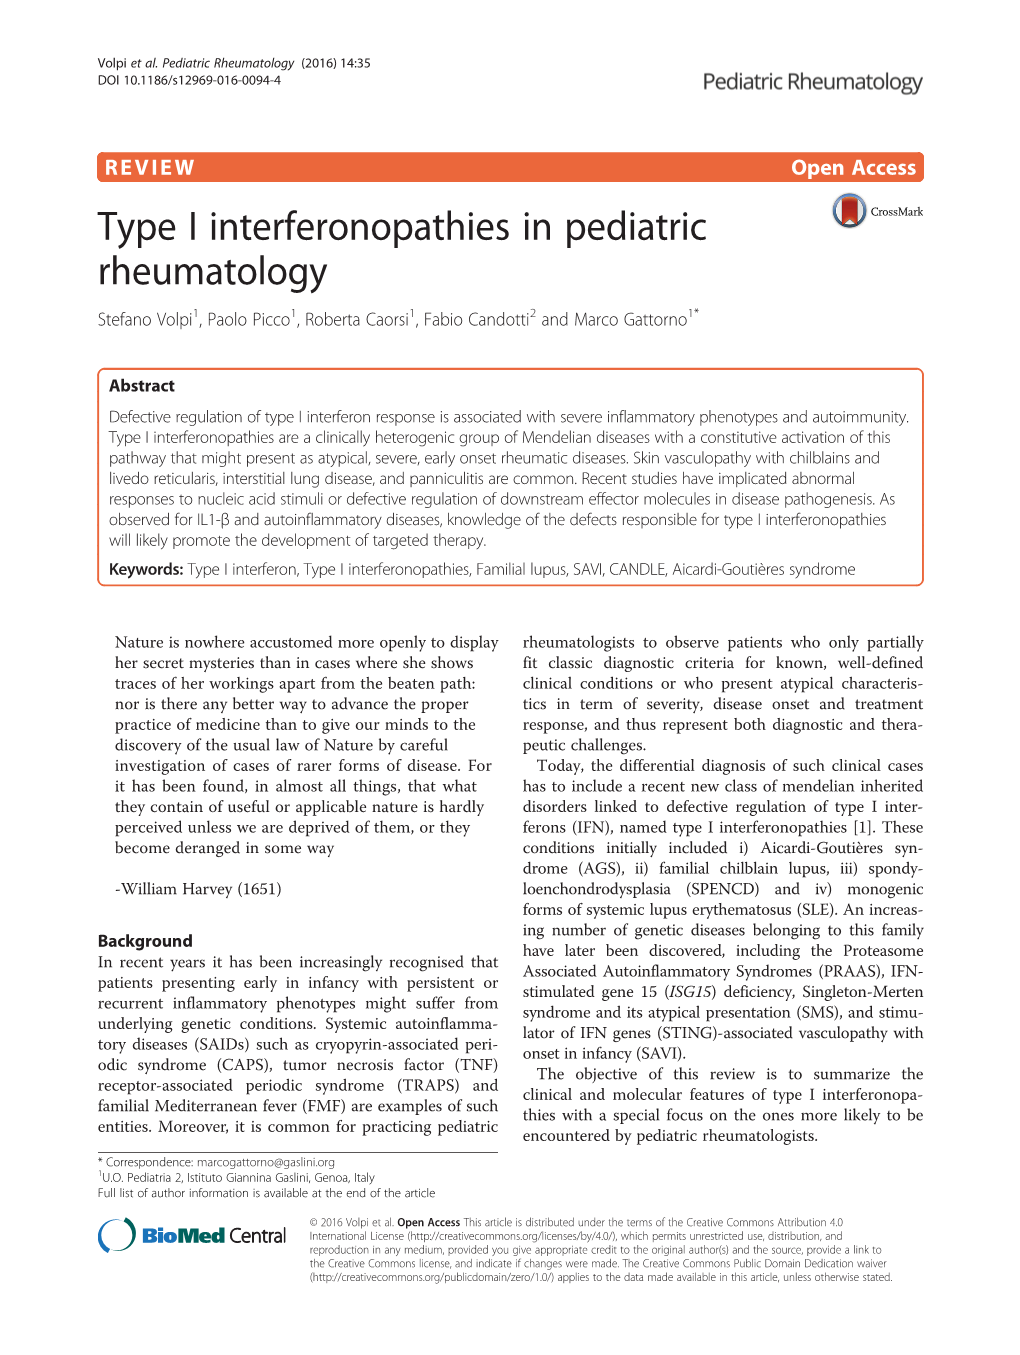 Type I Interferonopathies in Pediatric Rheumatology Stefano Volpi1, Paolo Picco1, Roberta Caorsi1, Fabio Candotti2 and Marco Gattorno1*